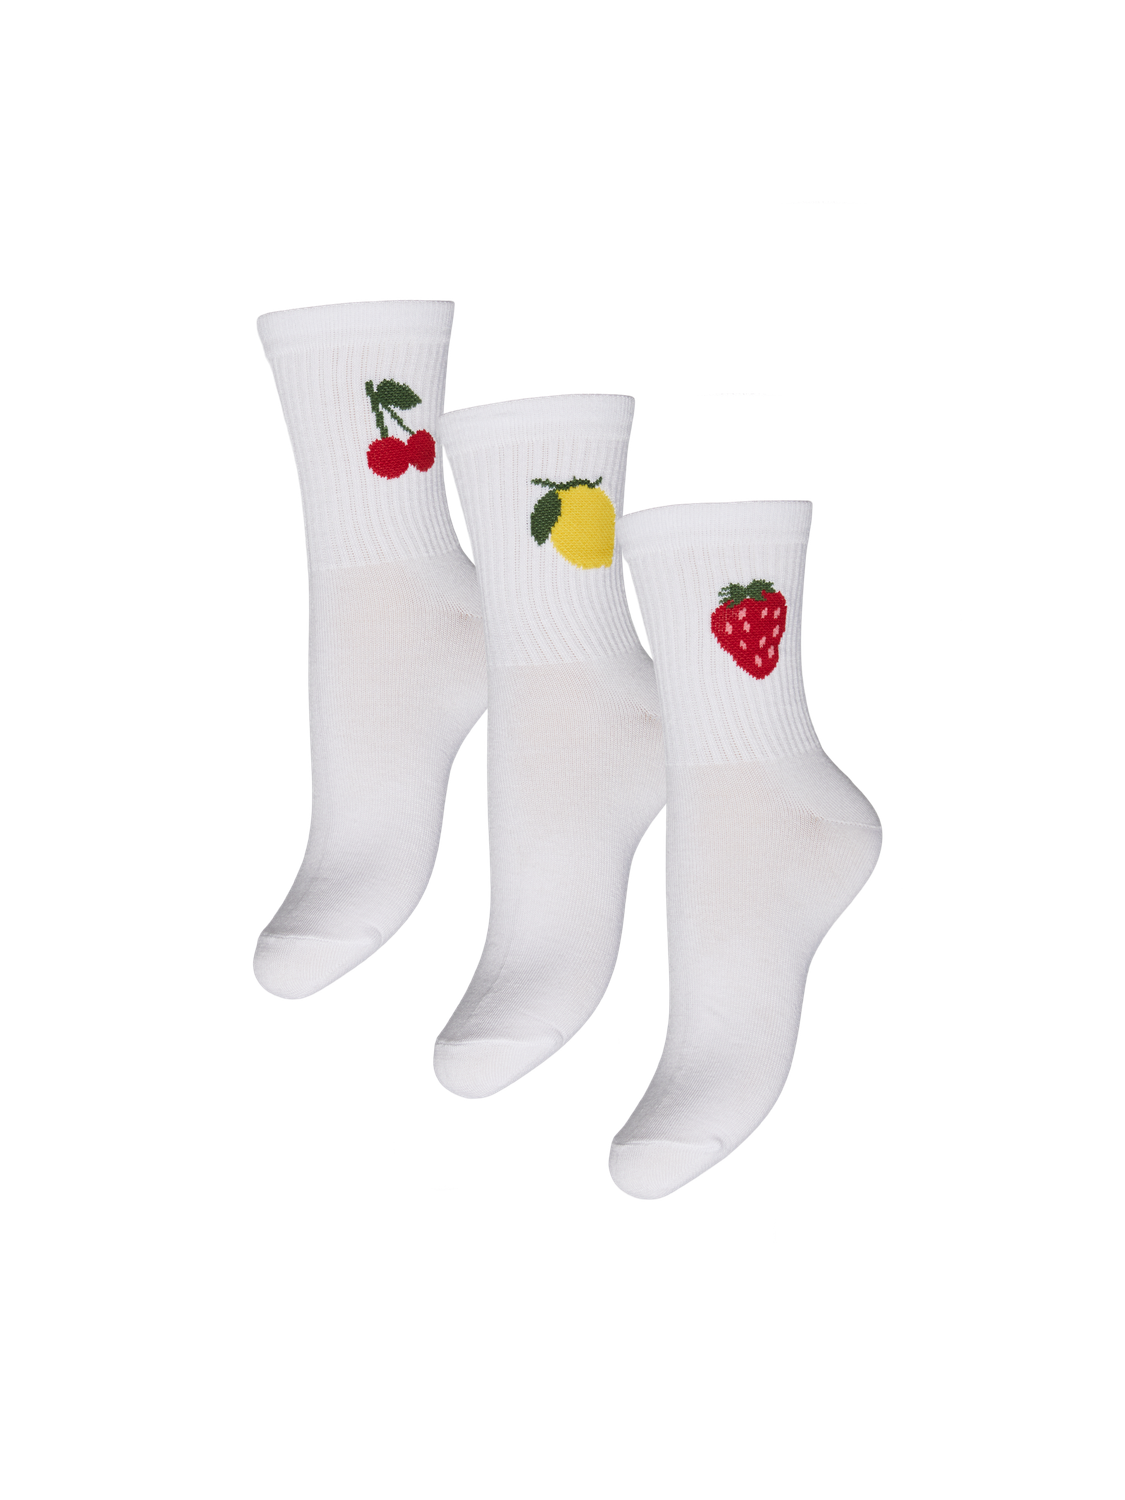 PCSANNI Socks - Bright White